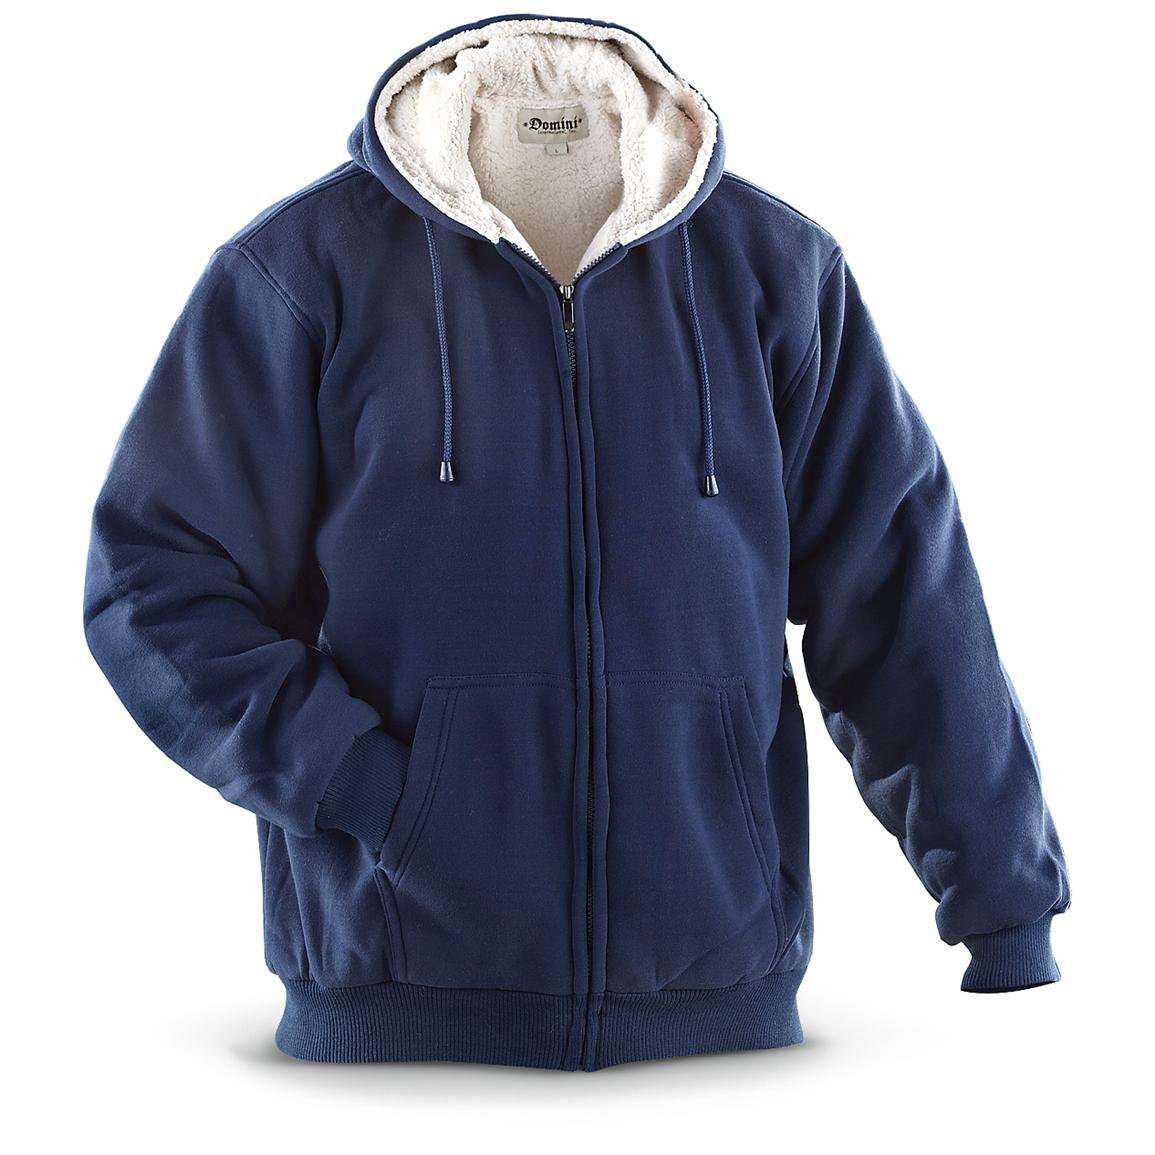 Domini Fleece - lined Hooded Jacket - 233428, Sweatshirts & Hoodies at ...